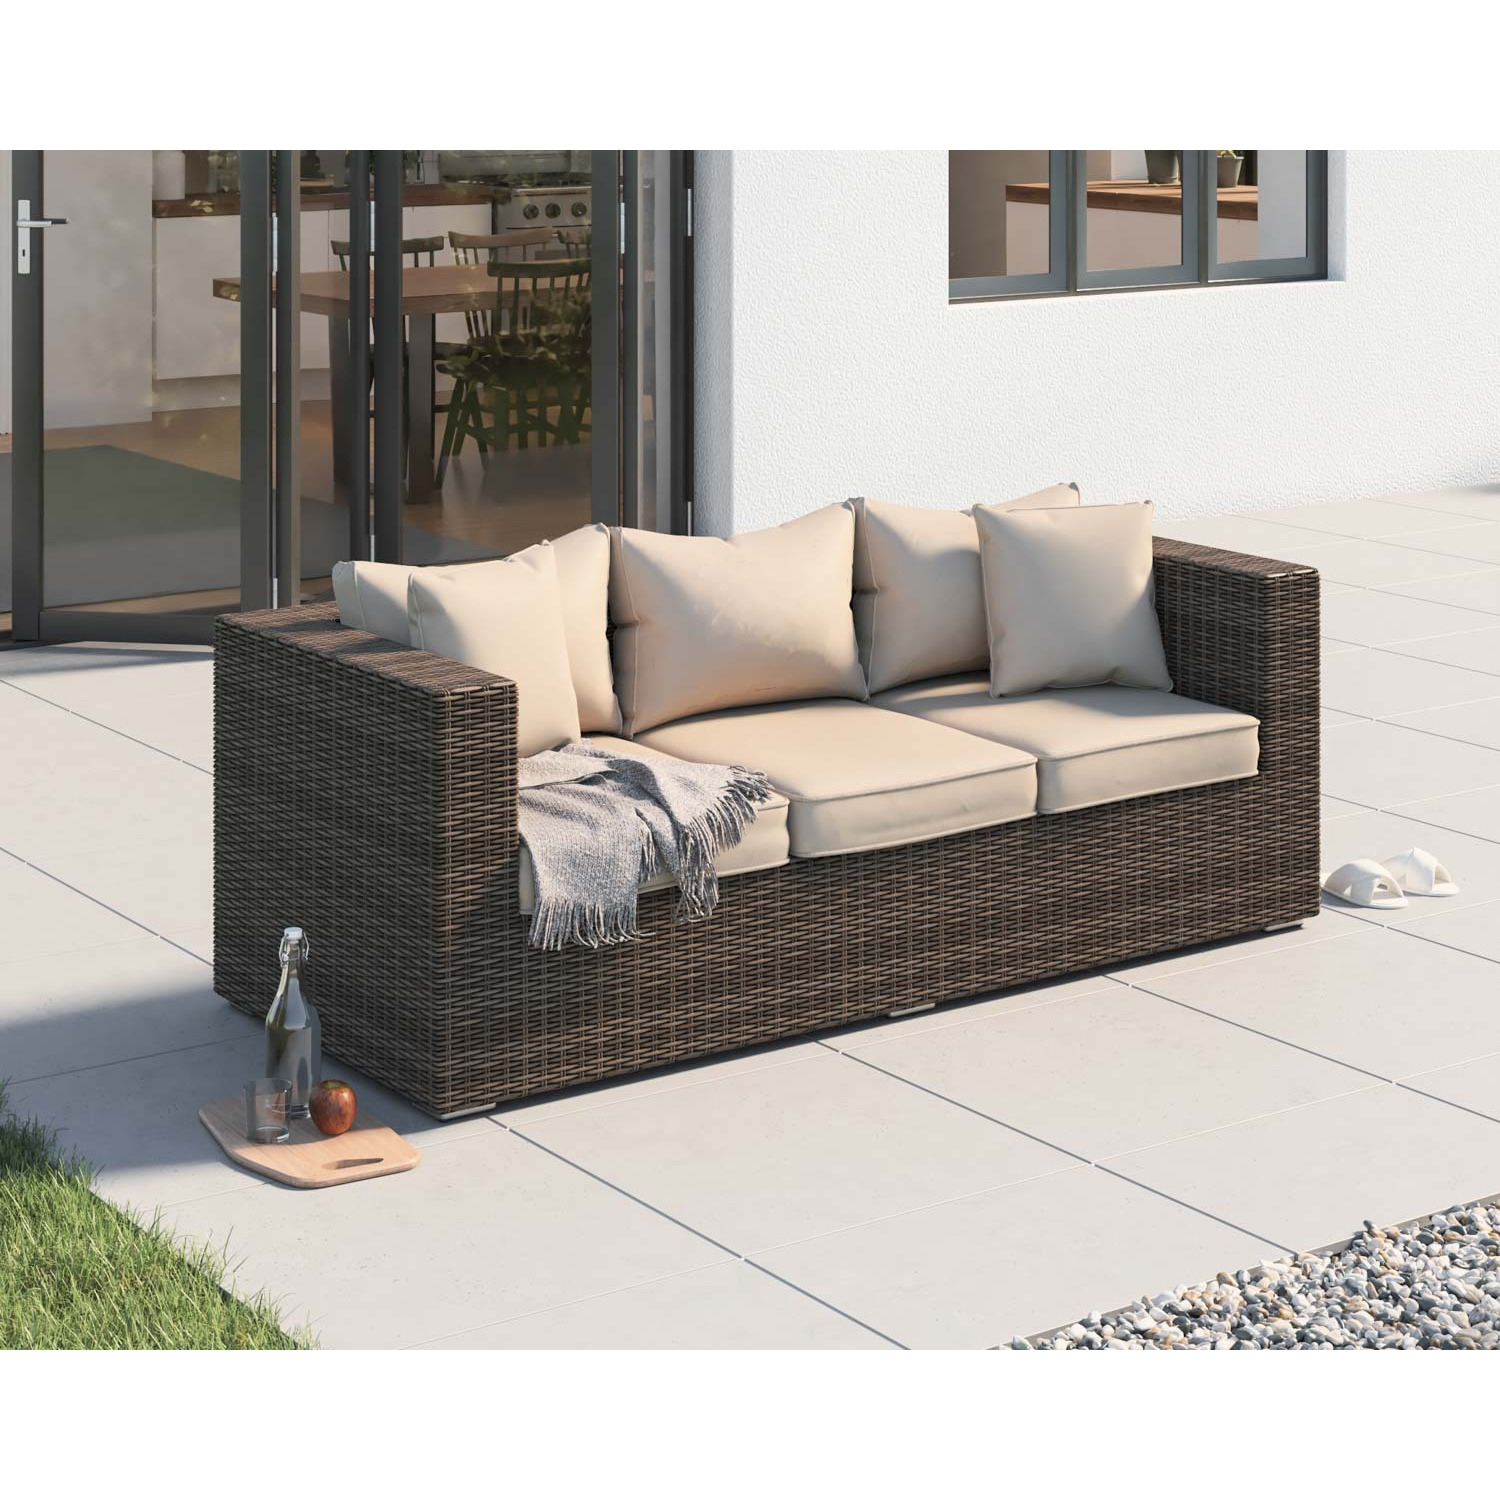 3 Seater Rattan Garden Sofa in Truffle Brown & Champagne - Ascot - Rattan Direct